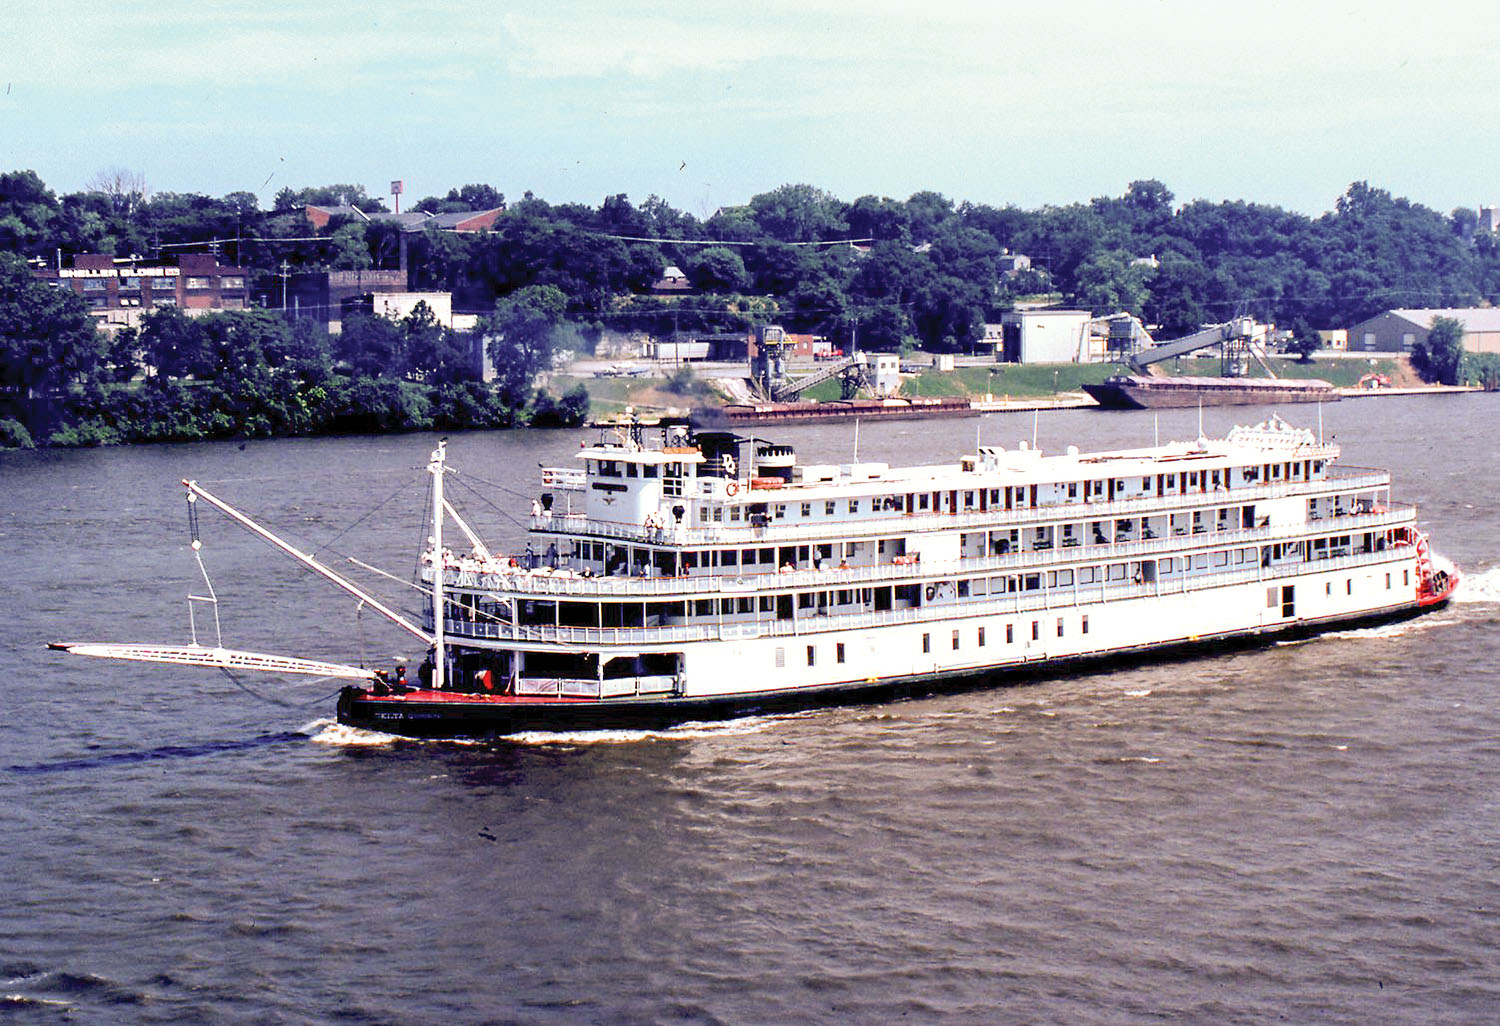 The Str. Delta Queen on the Upper Mississippi River in September 1981. (Capt. Mike Herschler photo)